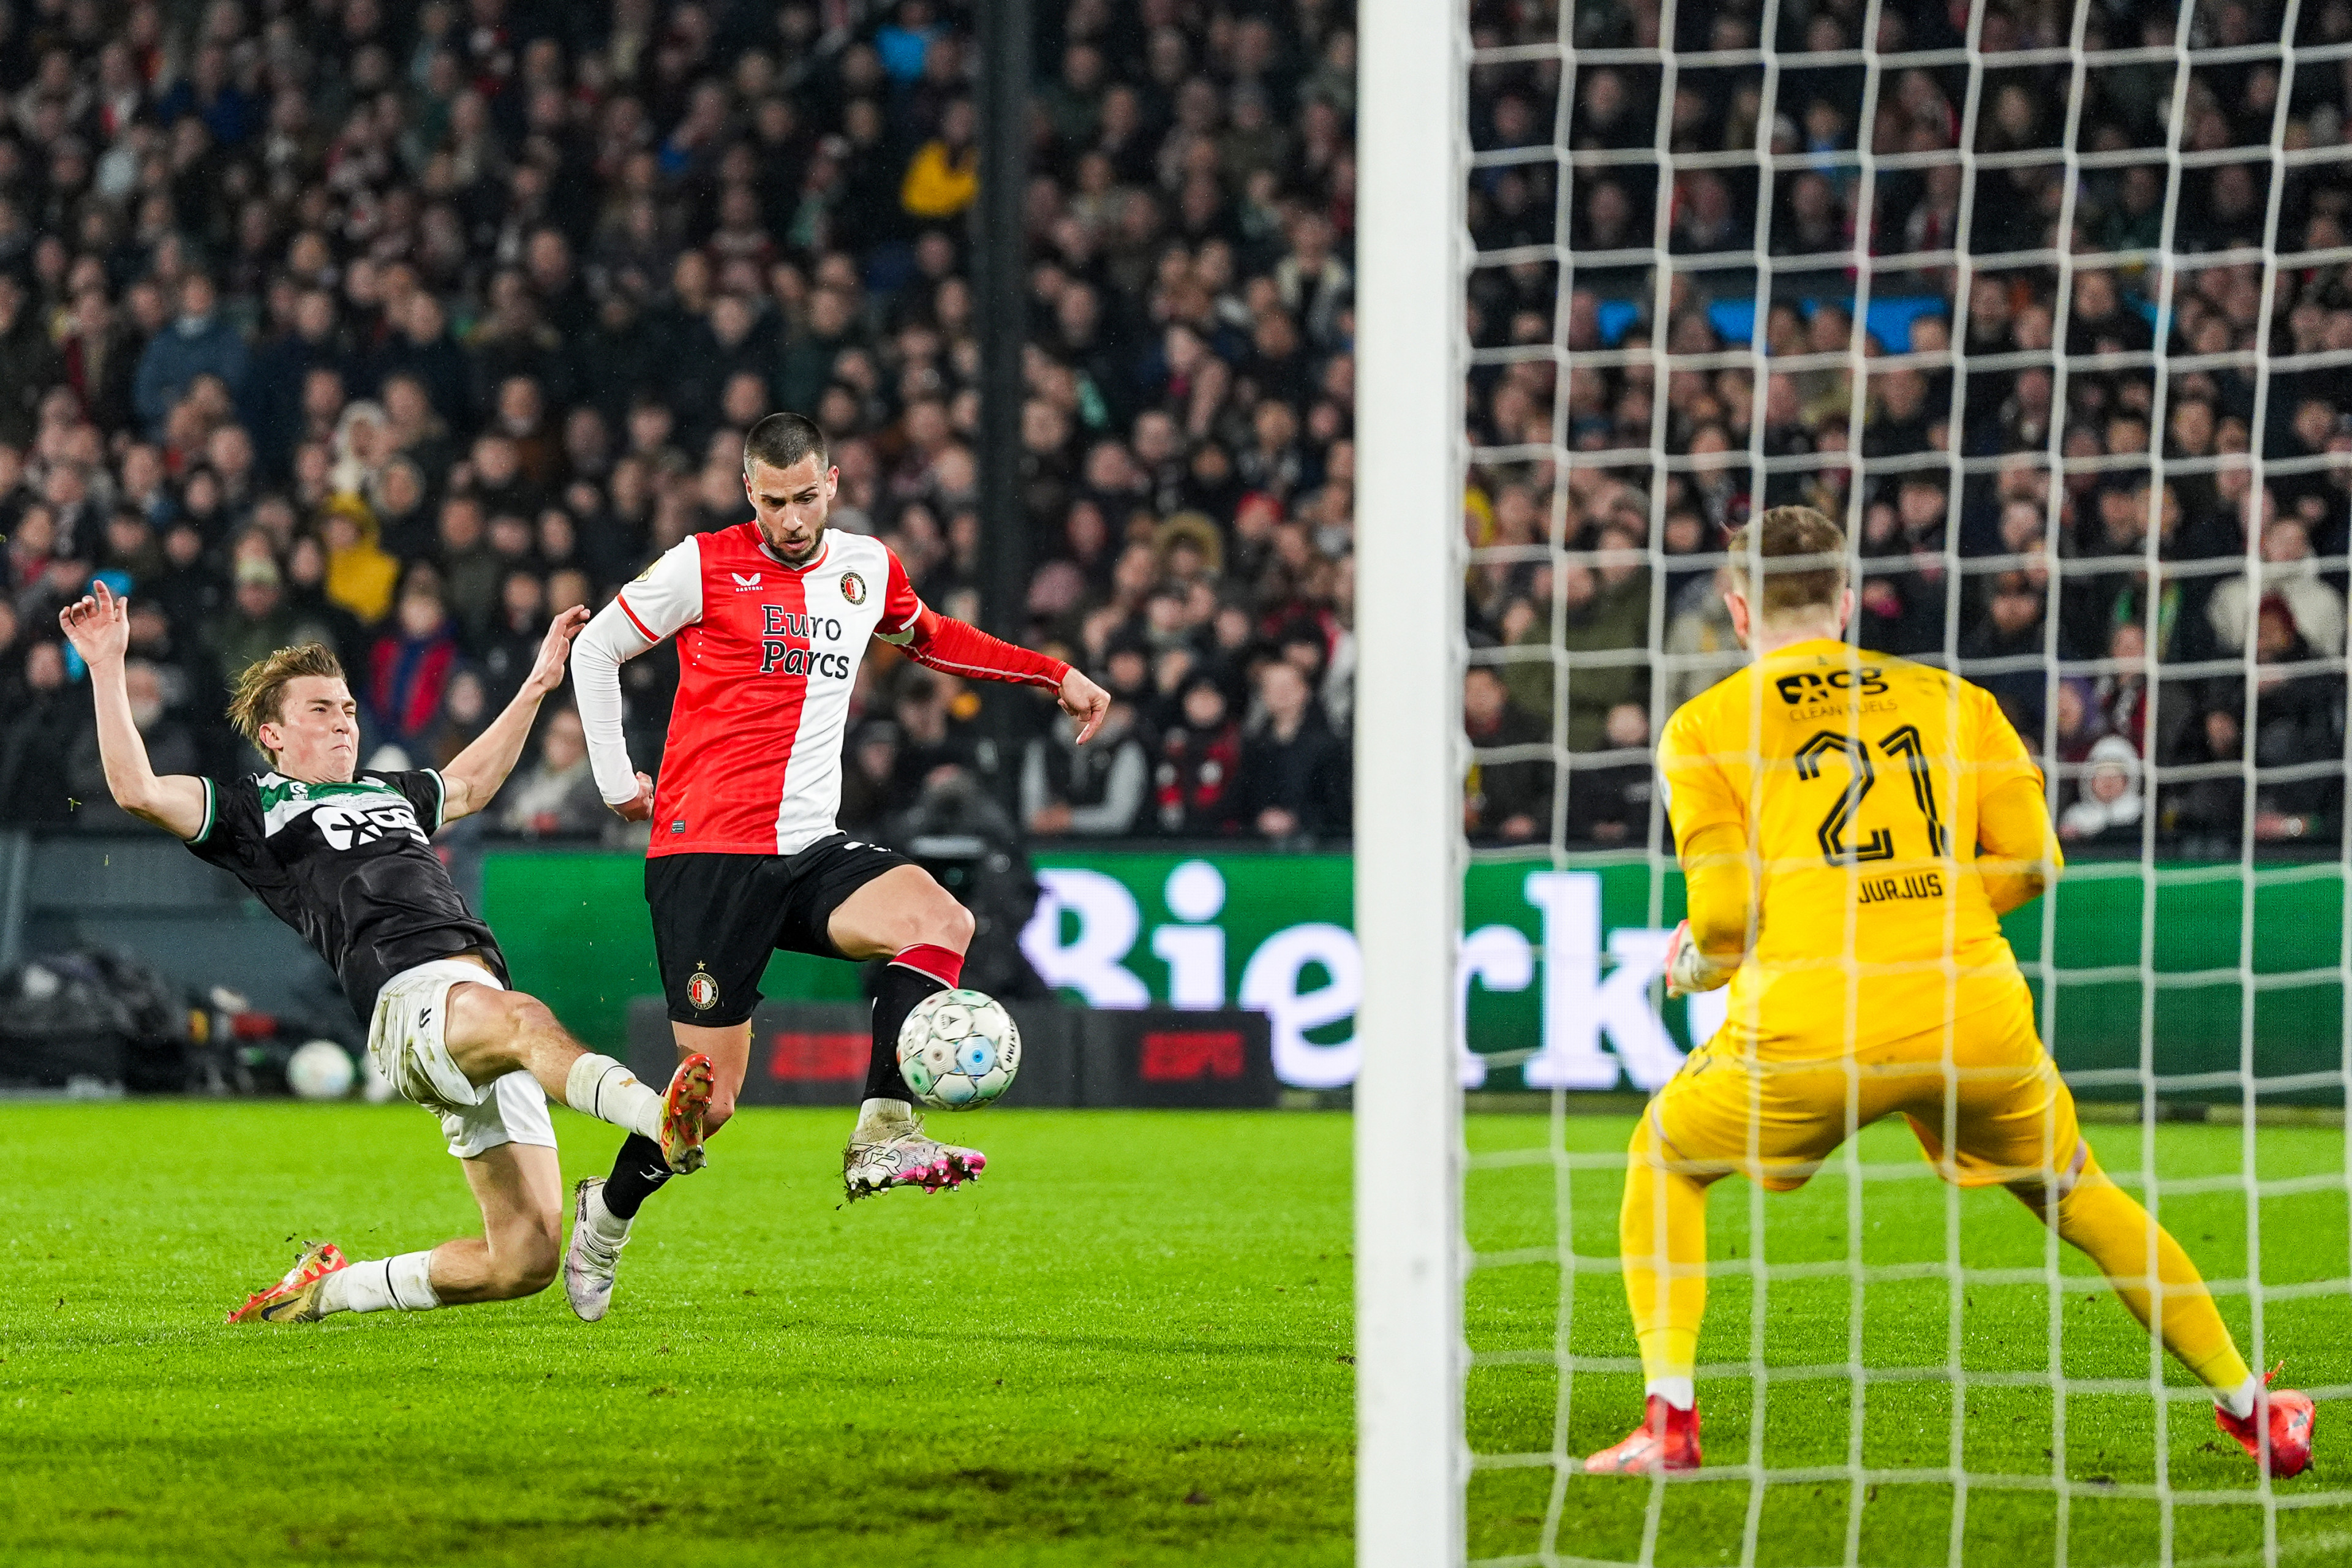 Liveblog • Feyenoord - FC Groningen • 2-1 [FT]